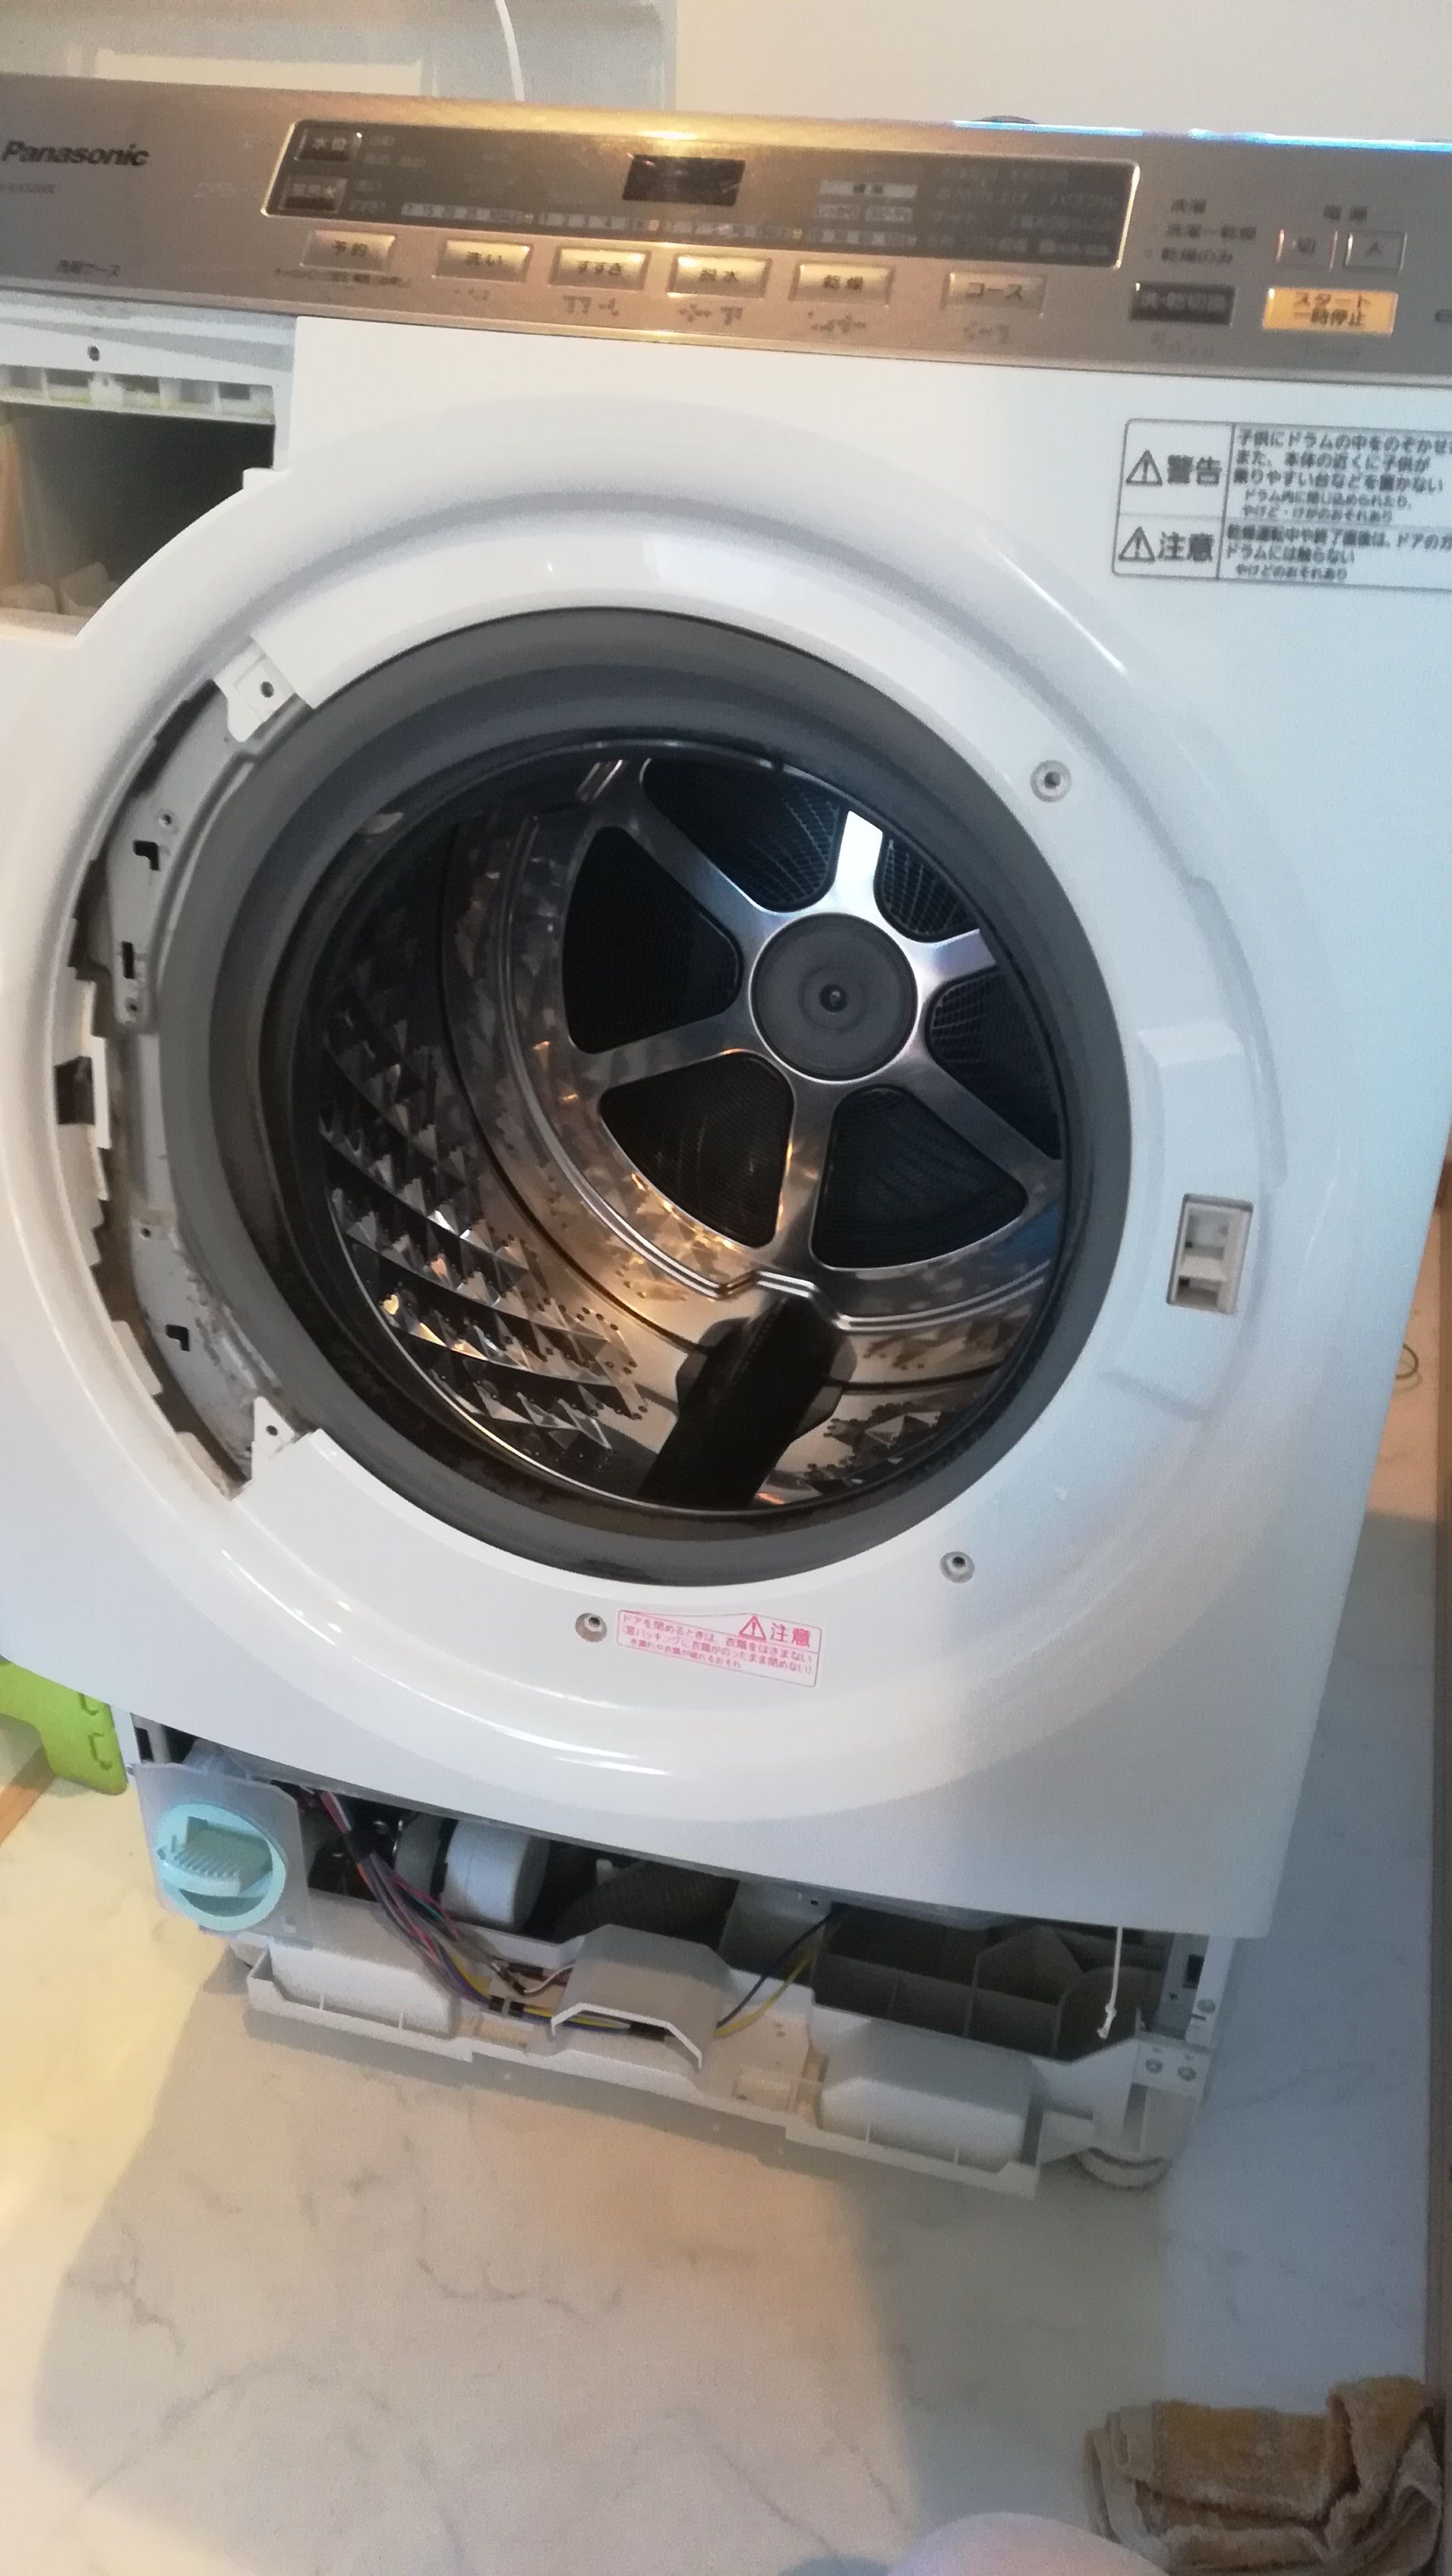 Panasonicドラム式洗濯機NA-VX5200Lのゴムパッキング交換 | 楽天と生活